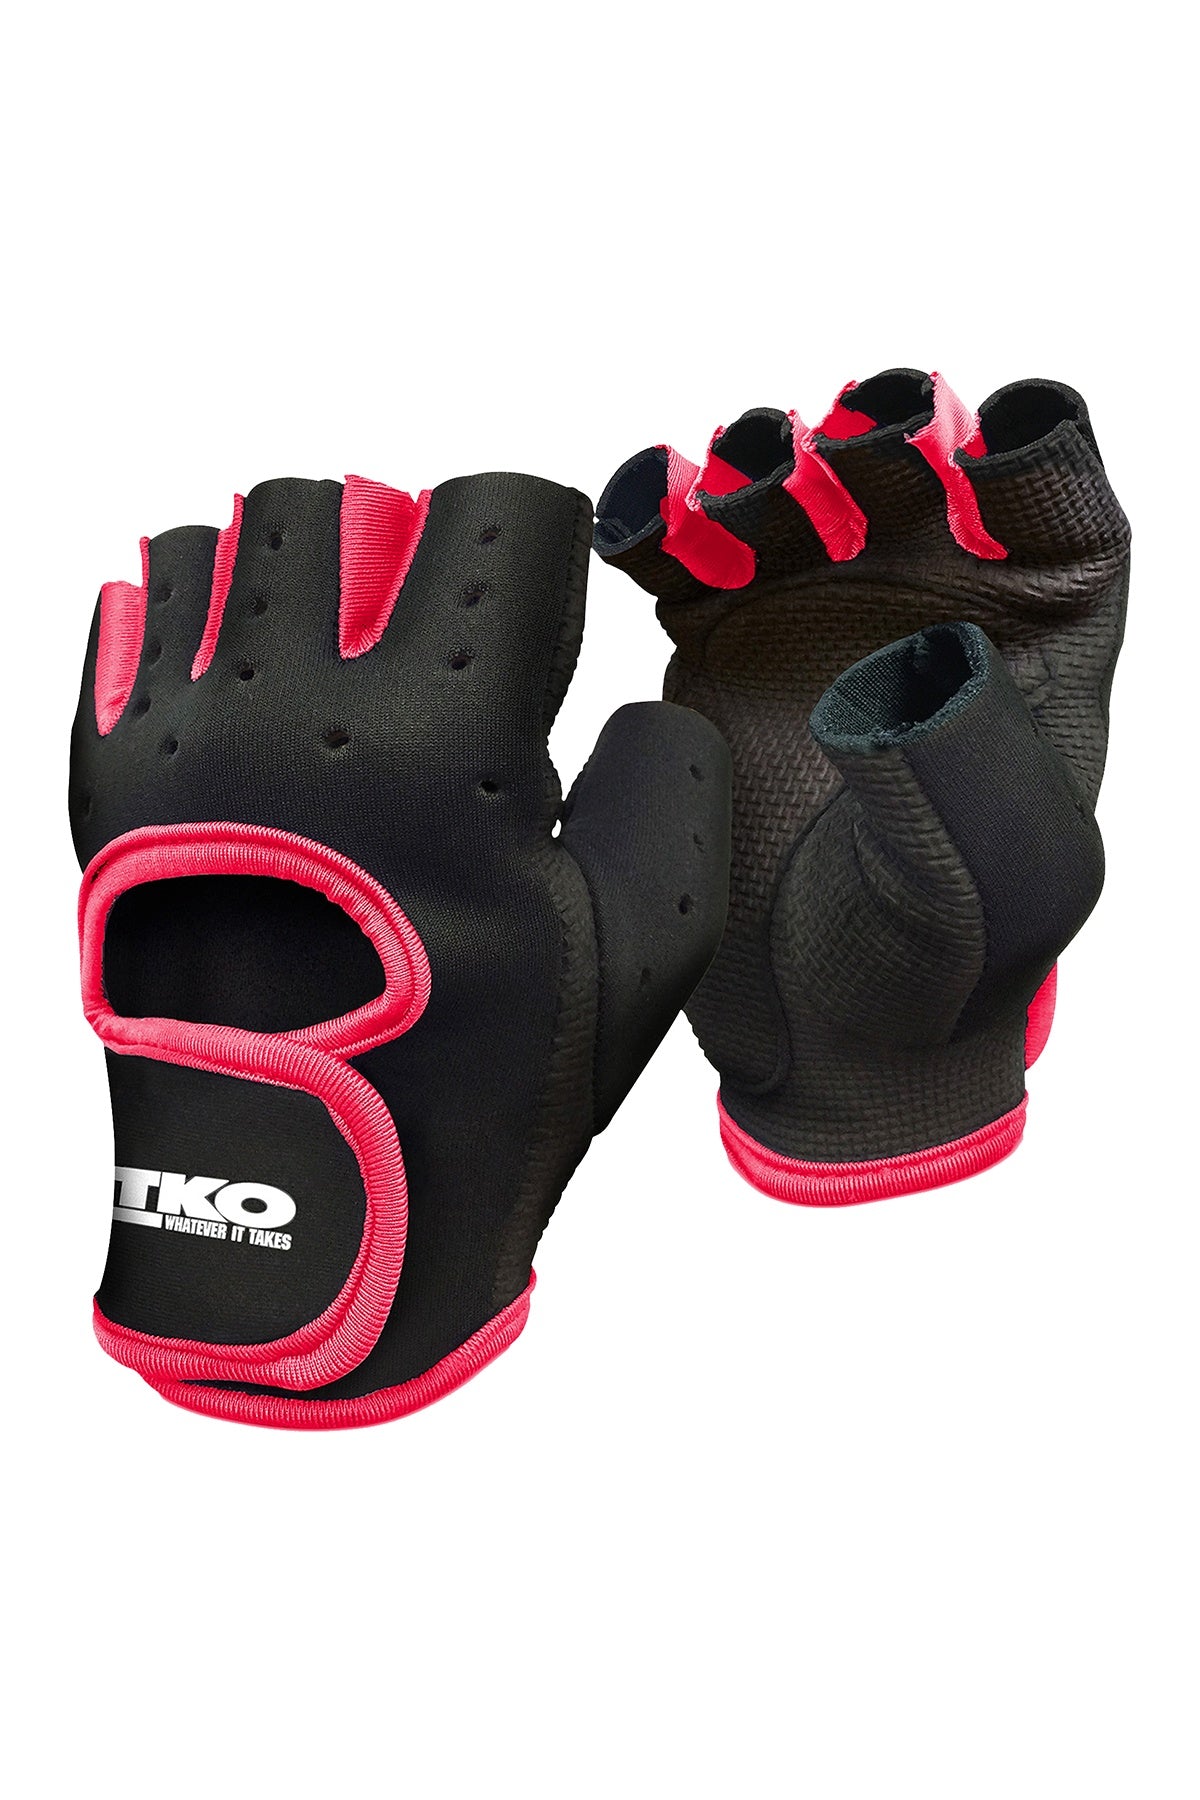 TKO Onyx/Pink Universal Workout Gloves